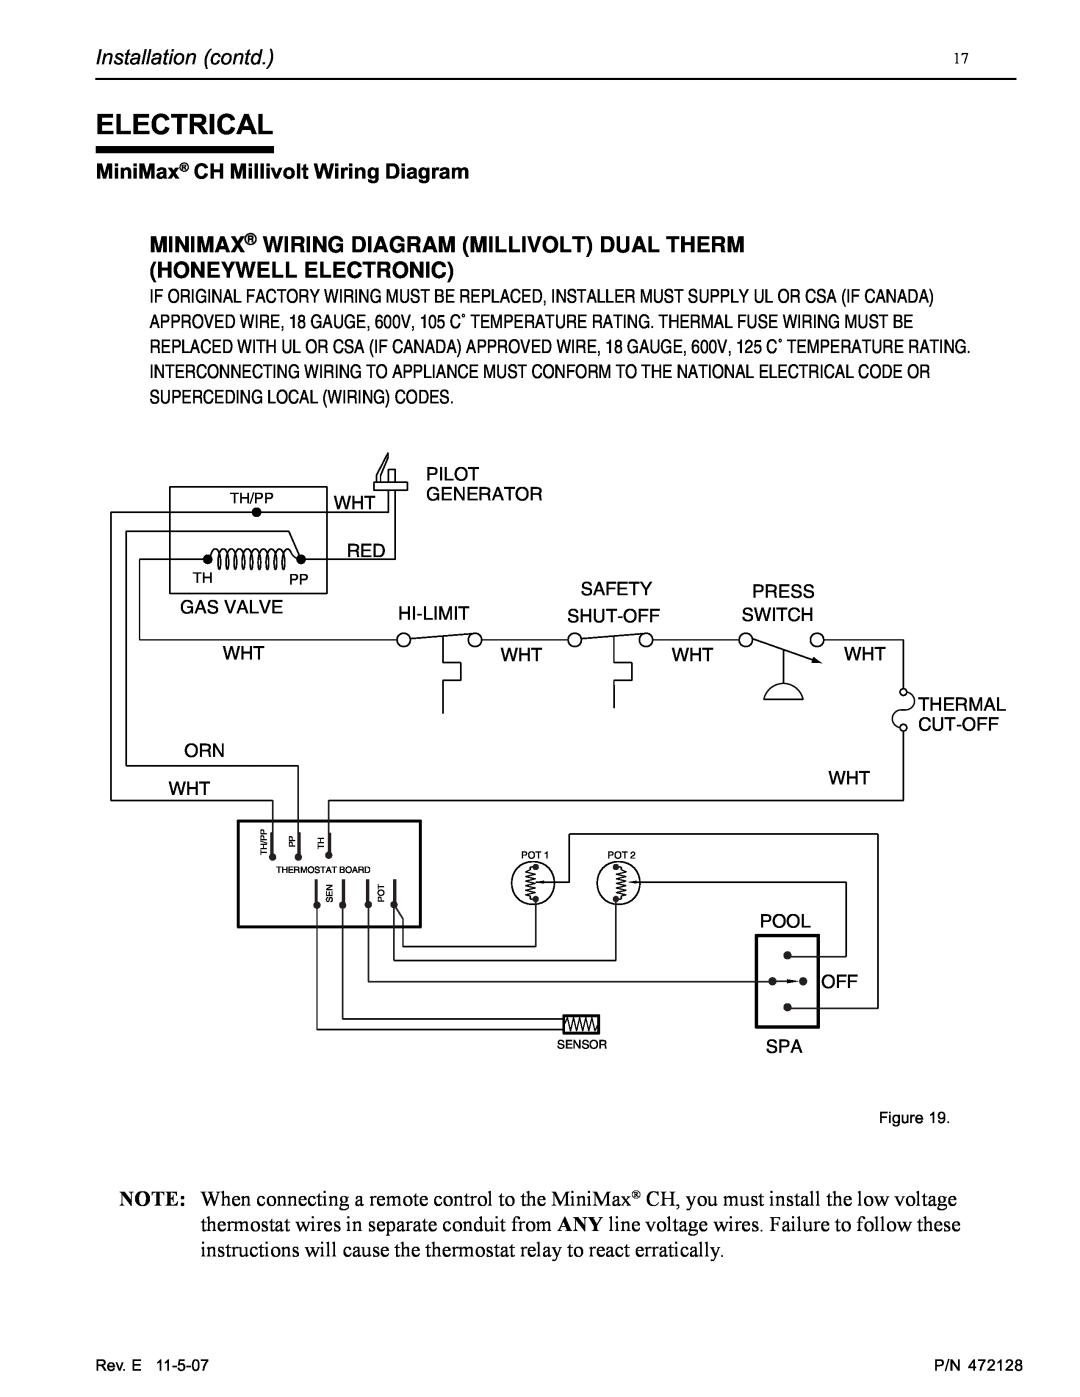 Pentair Hot Tub manual Electrical, MiniMax CH Millivolt Wiring Diagram, Installation contd 